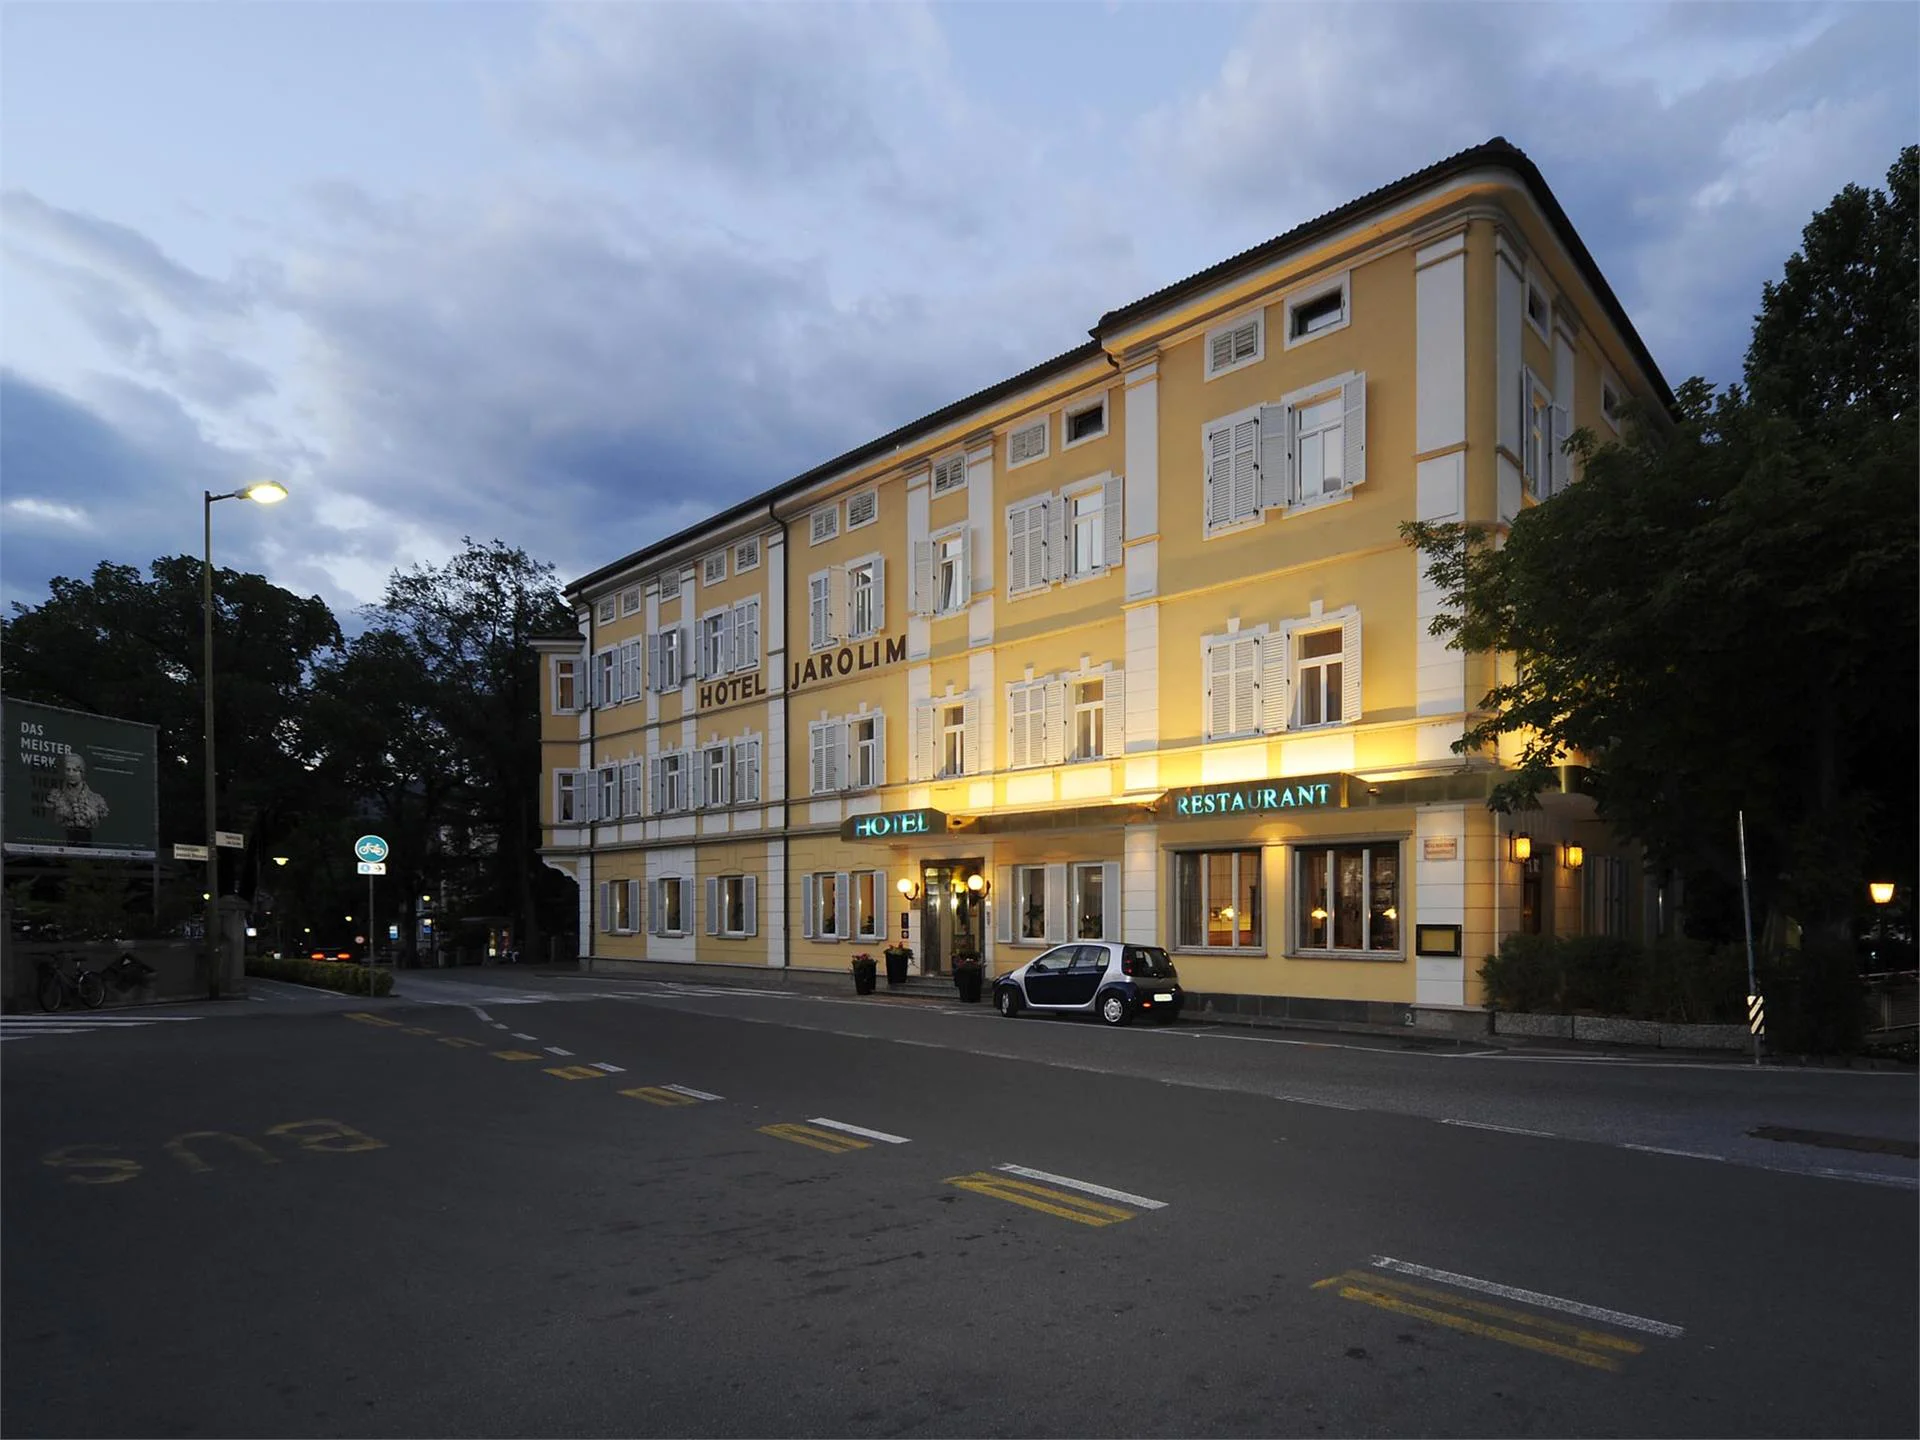 Hotel Jarolim Brixen 4 suedtirol.info